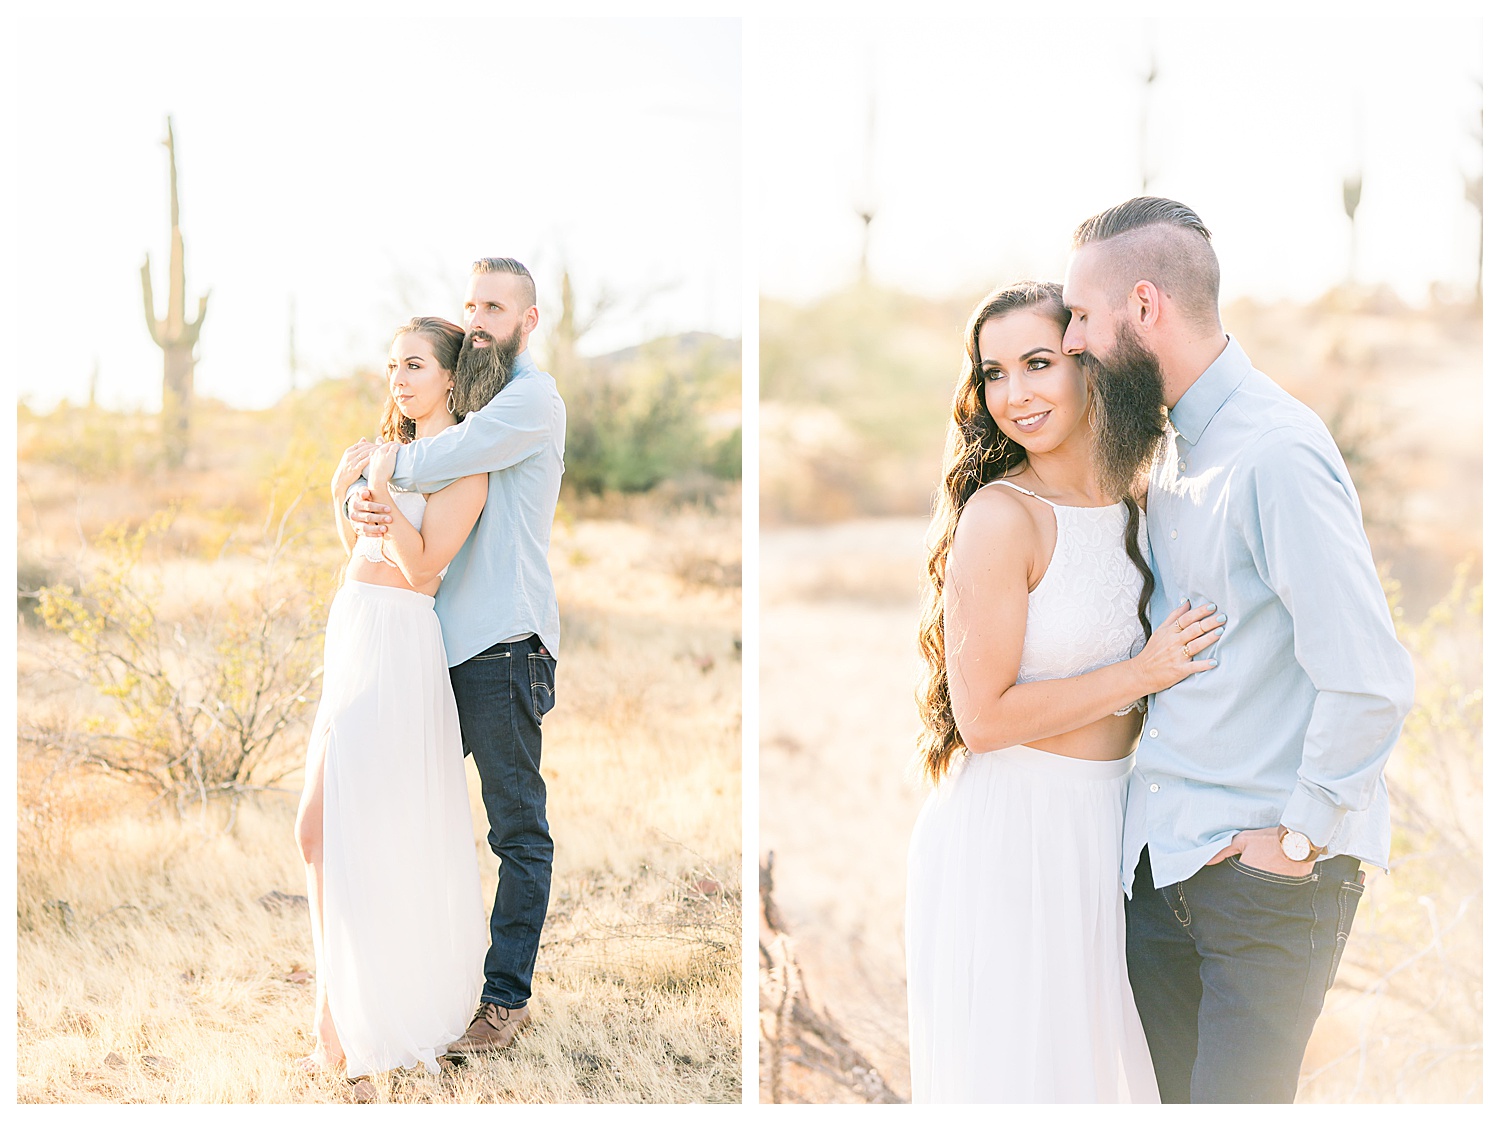 Desert Engagement Session, Phoenix Wedding Photographer, Engagement Session Outfits, White Dress, Jeans, Button Up Shirt Cactus, Saguaro Cactus